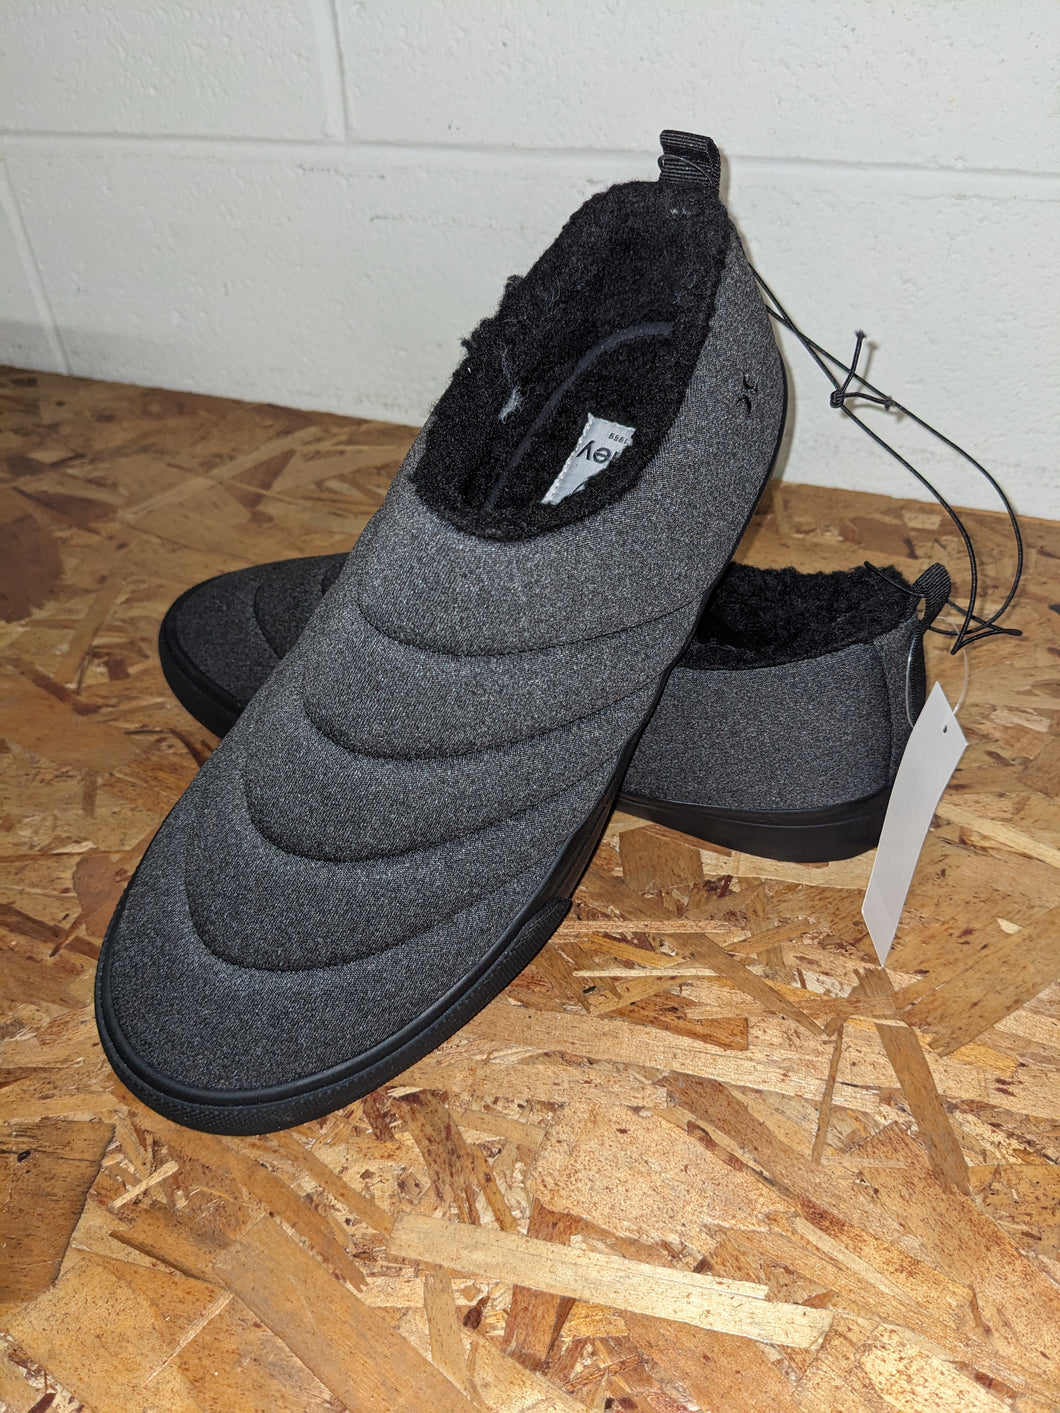 Men's Hurley Puff Clog Shoe, gray, size 9